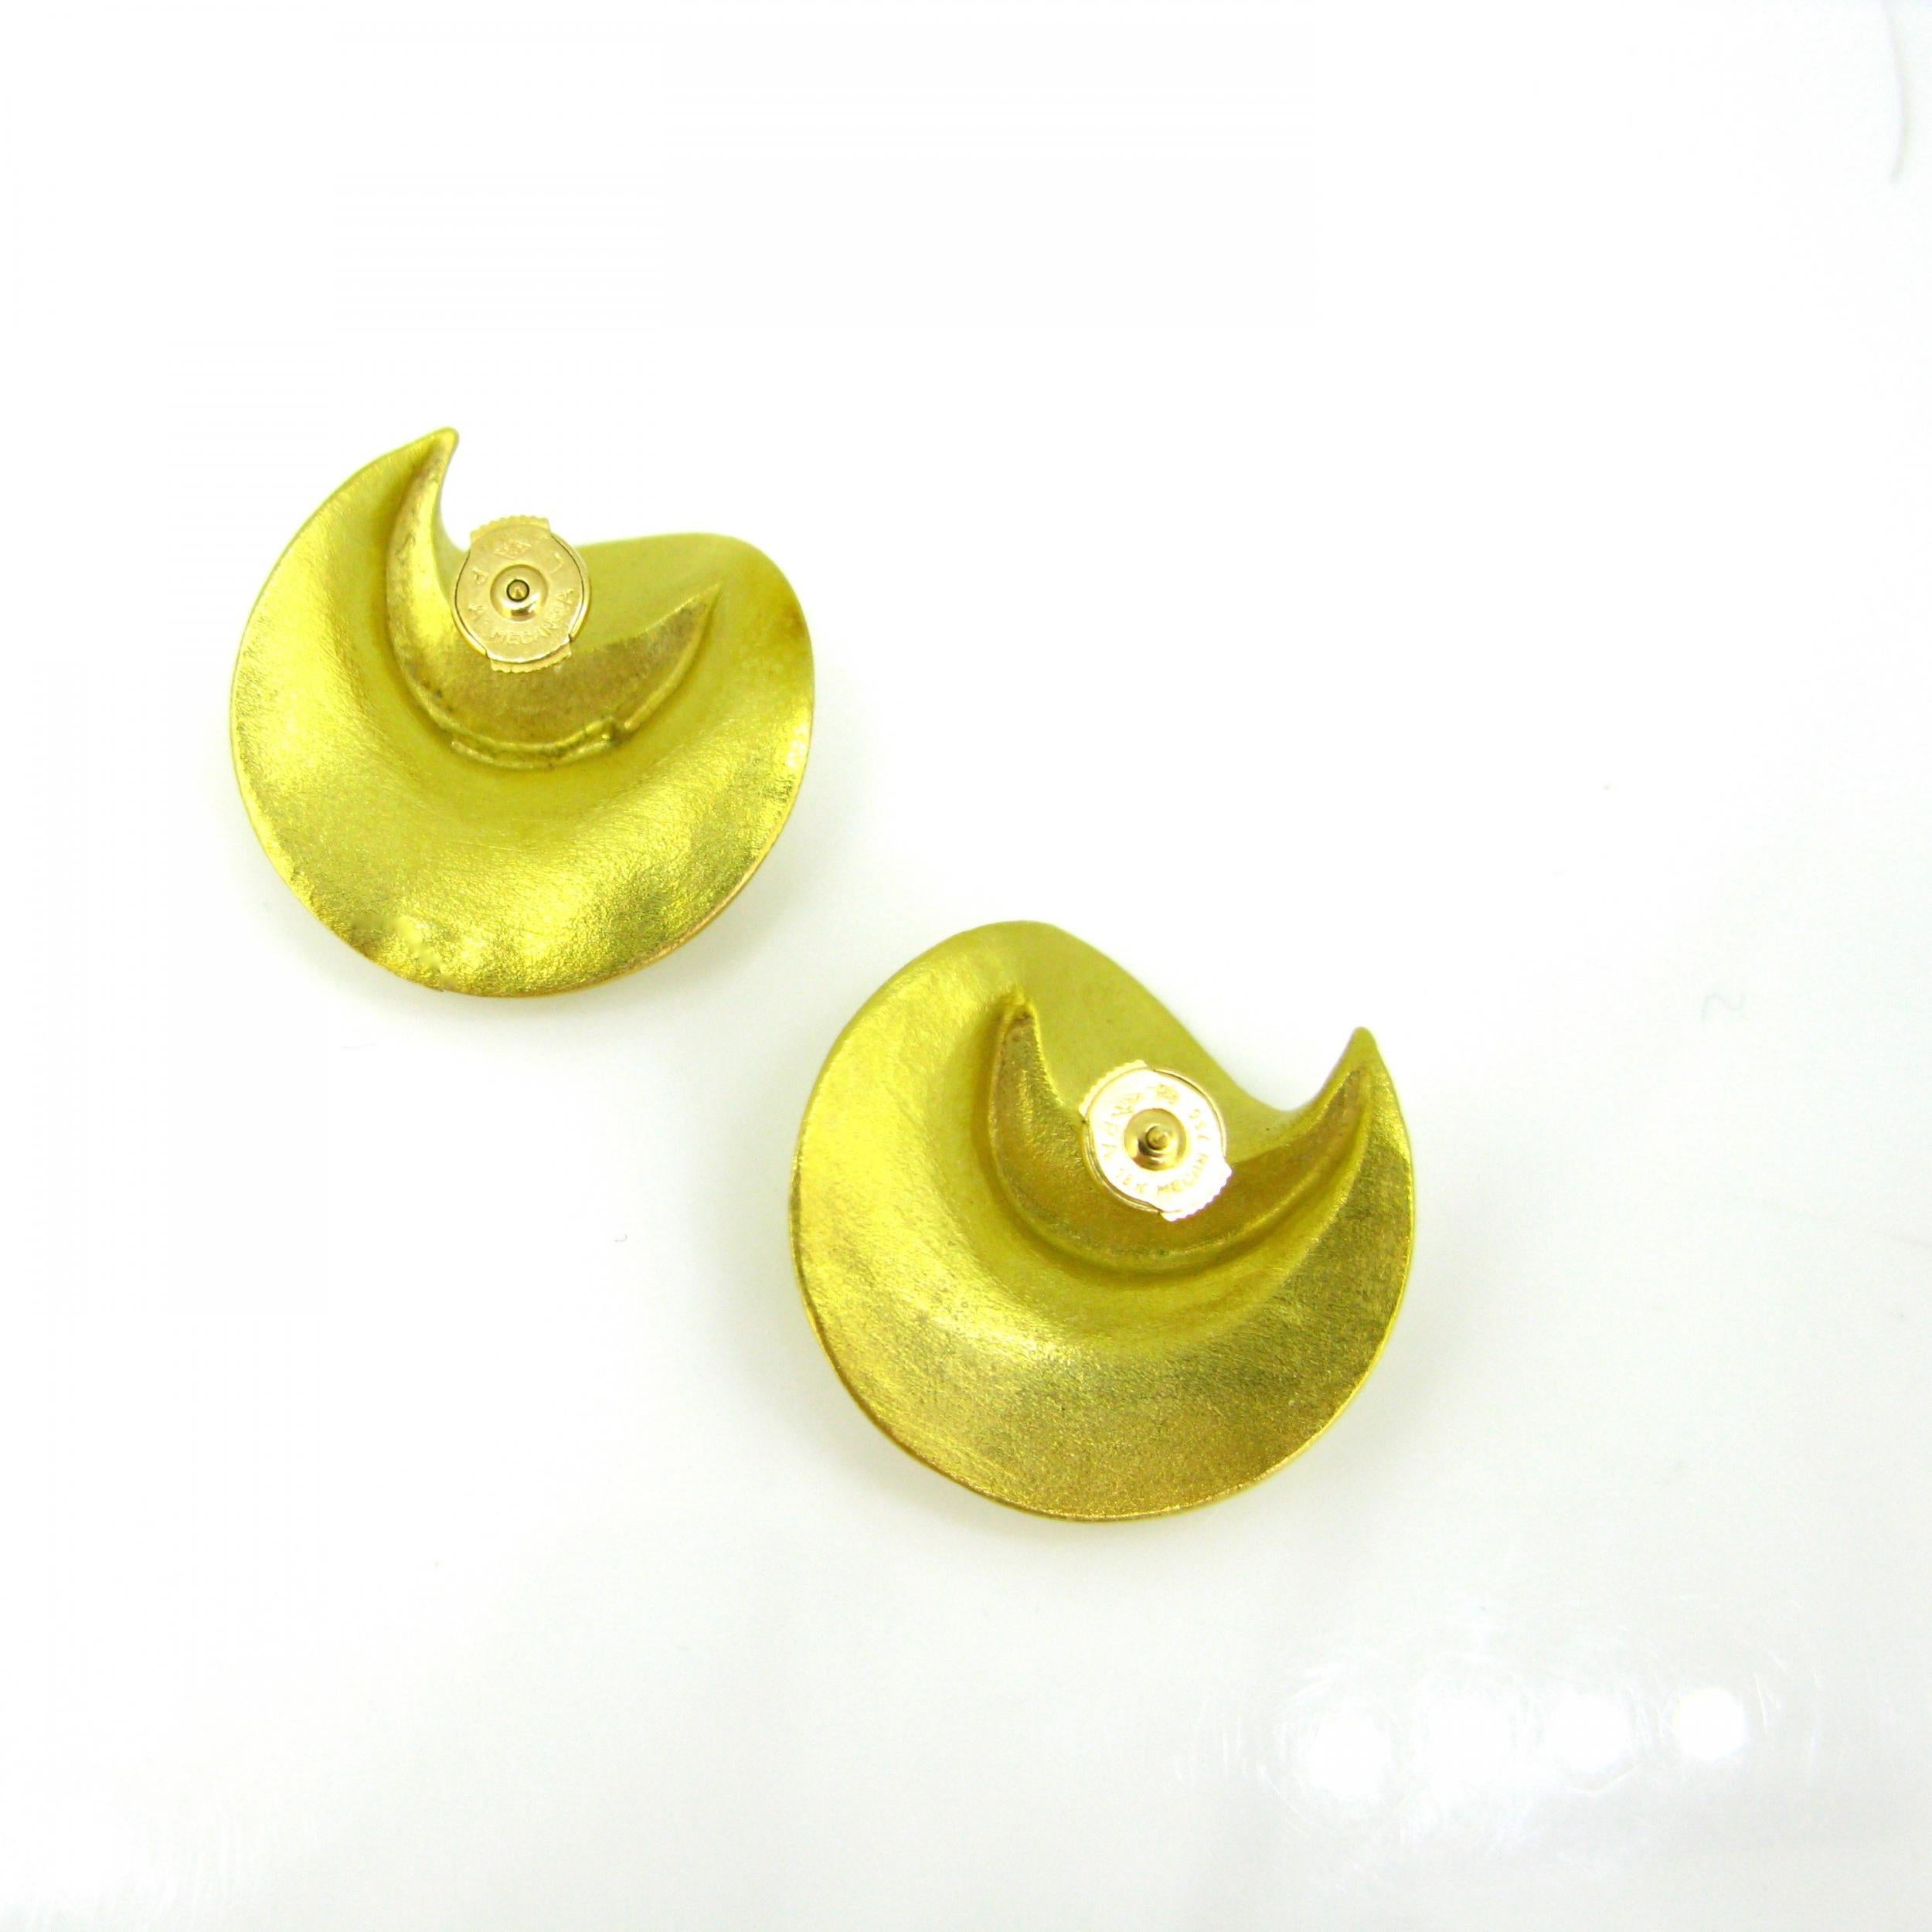 brushed gold stud earrings